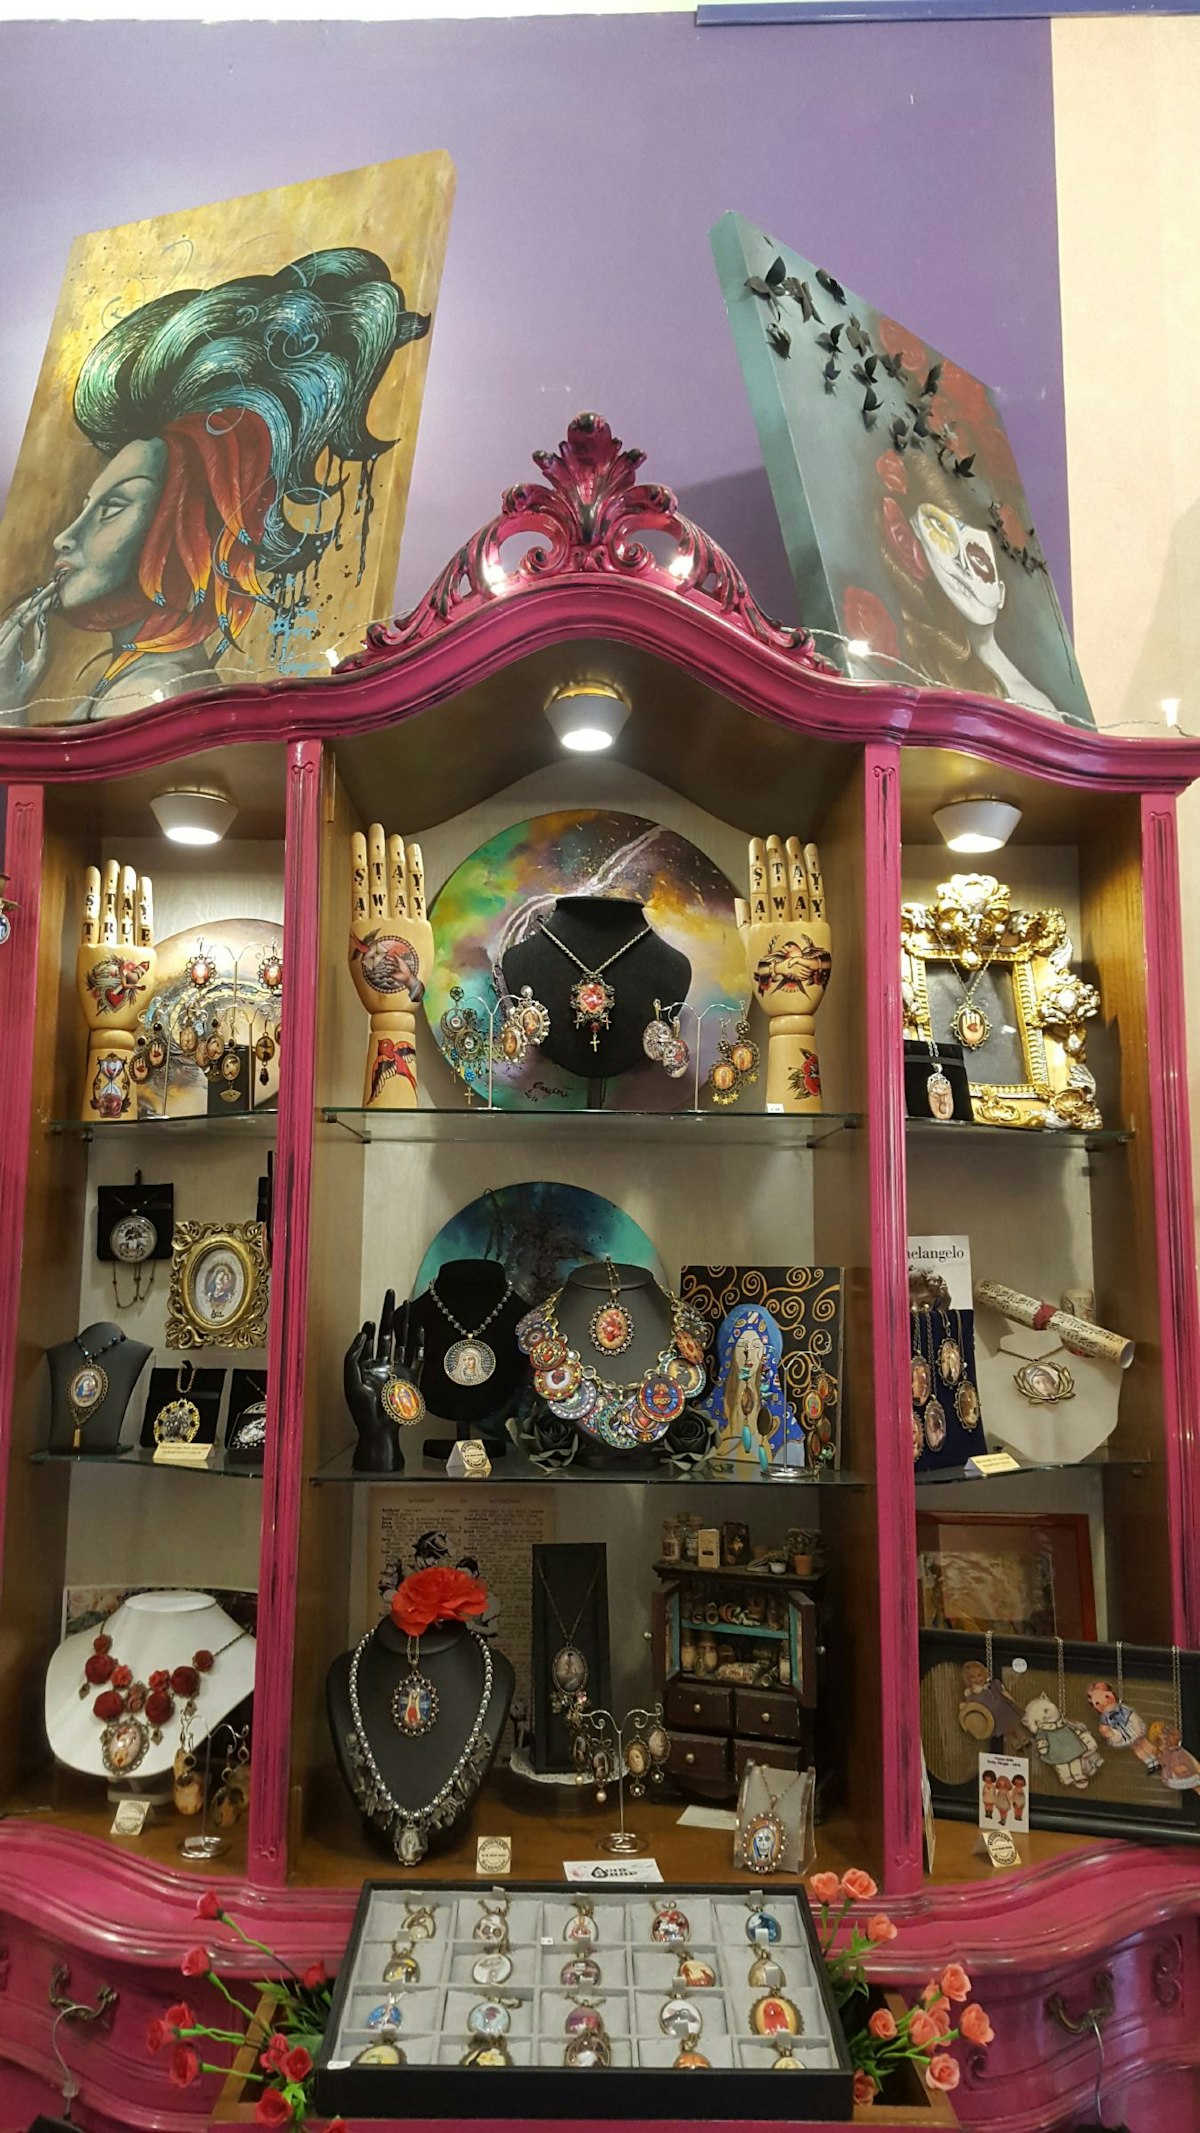 Display of merchandise